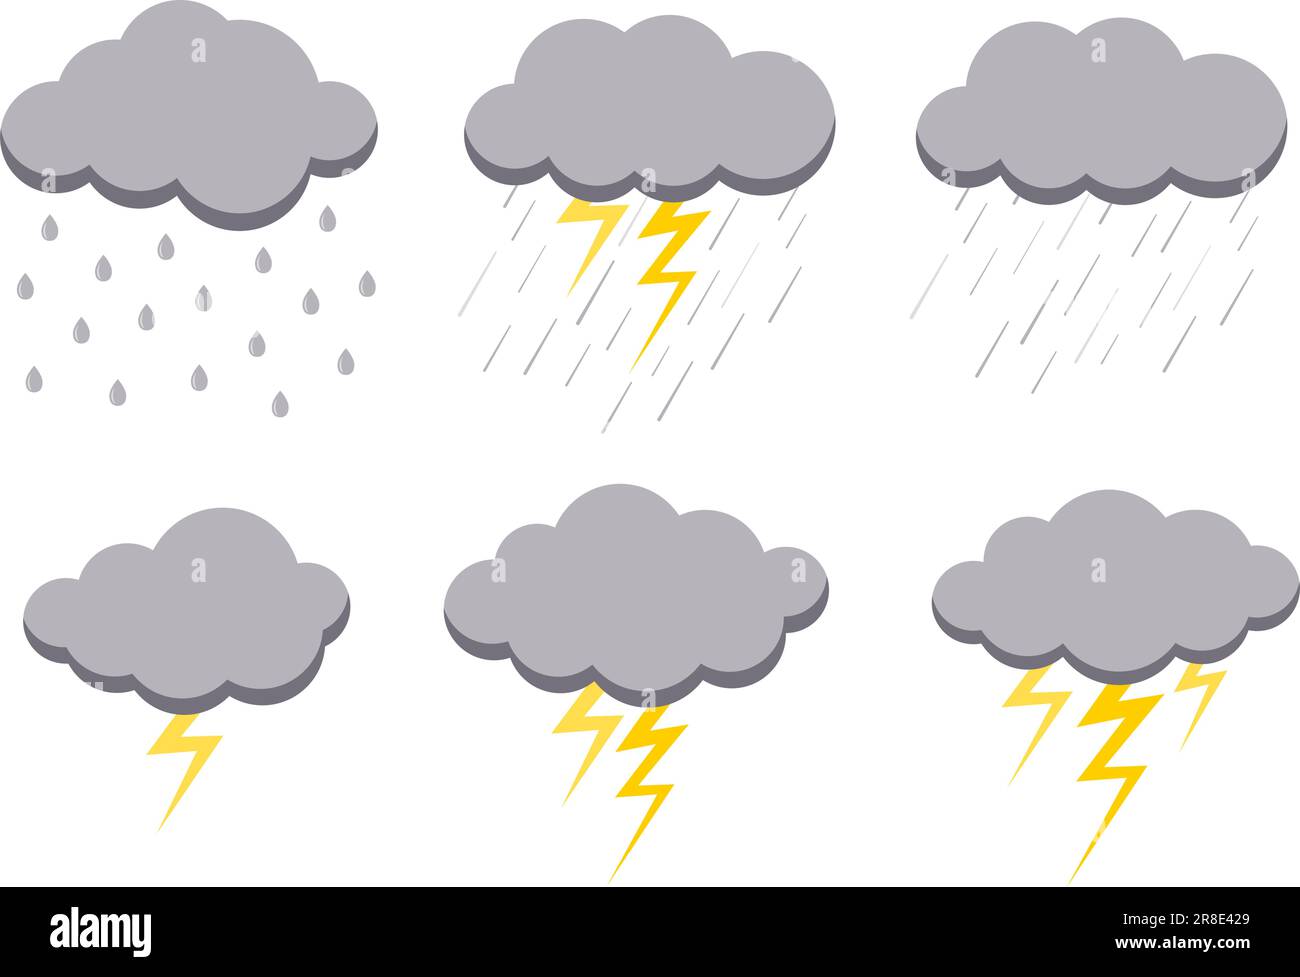 Clouds with rainy weather icon set isolated on white background. Illustration of light rain, shower, lightning thunder and thunderstorm. Rainy cloud v Stock Vector